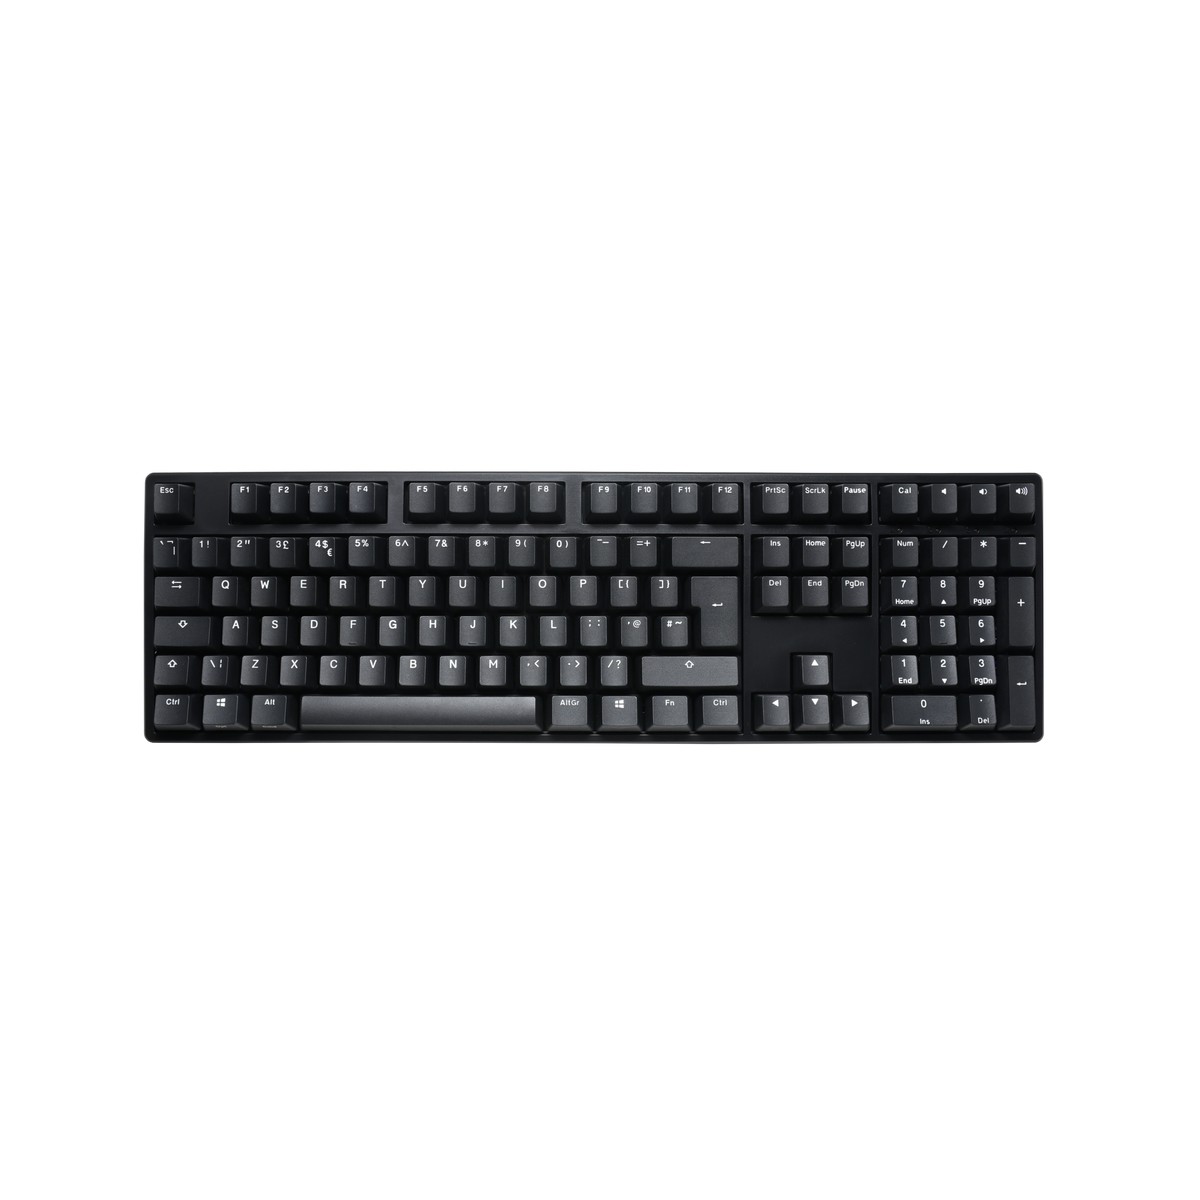 Ducky Origin USB Mechnical Gaming Keyboard Cherry MX Black - Black UK Layout